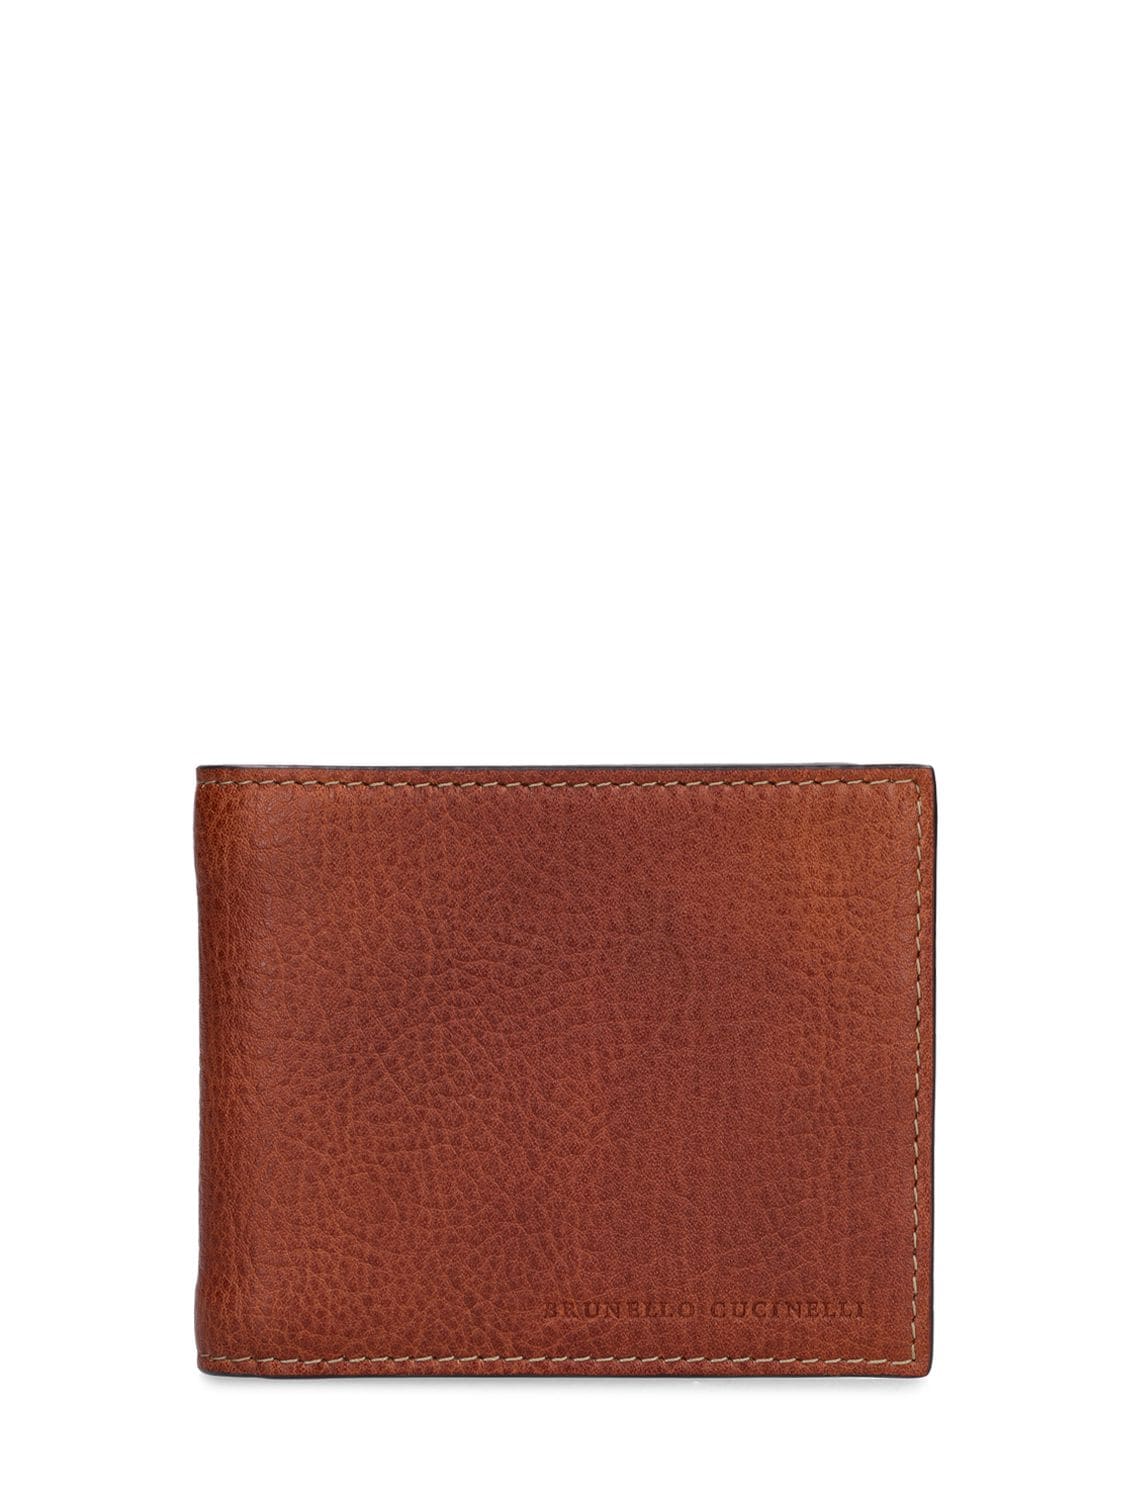 Brunello Cucinelli Grained Leather Bifold Wallet In Copper